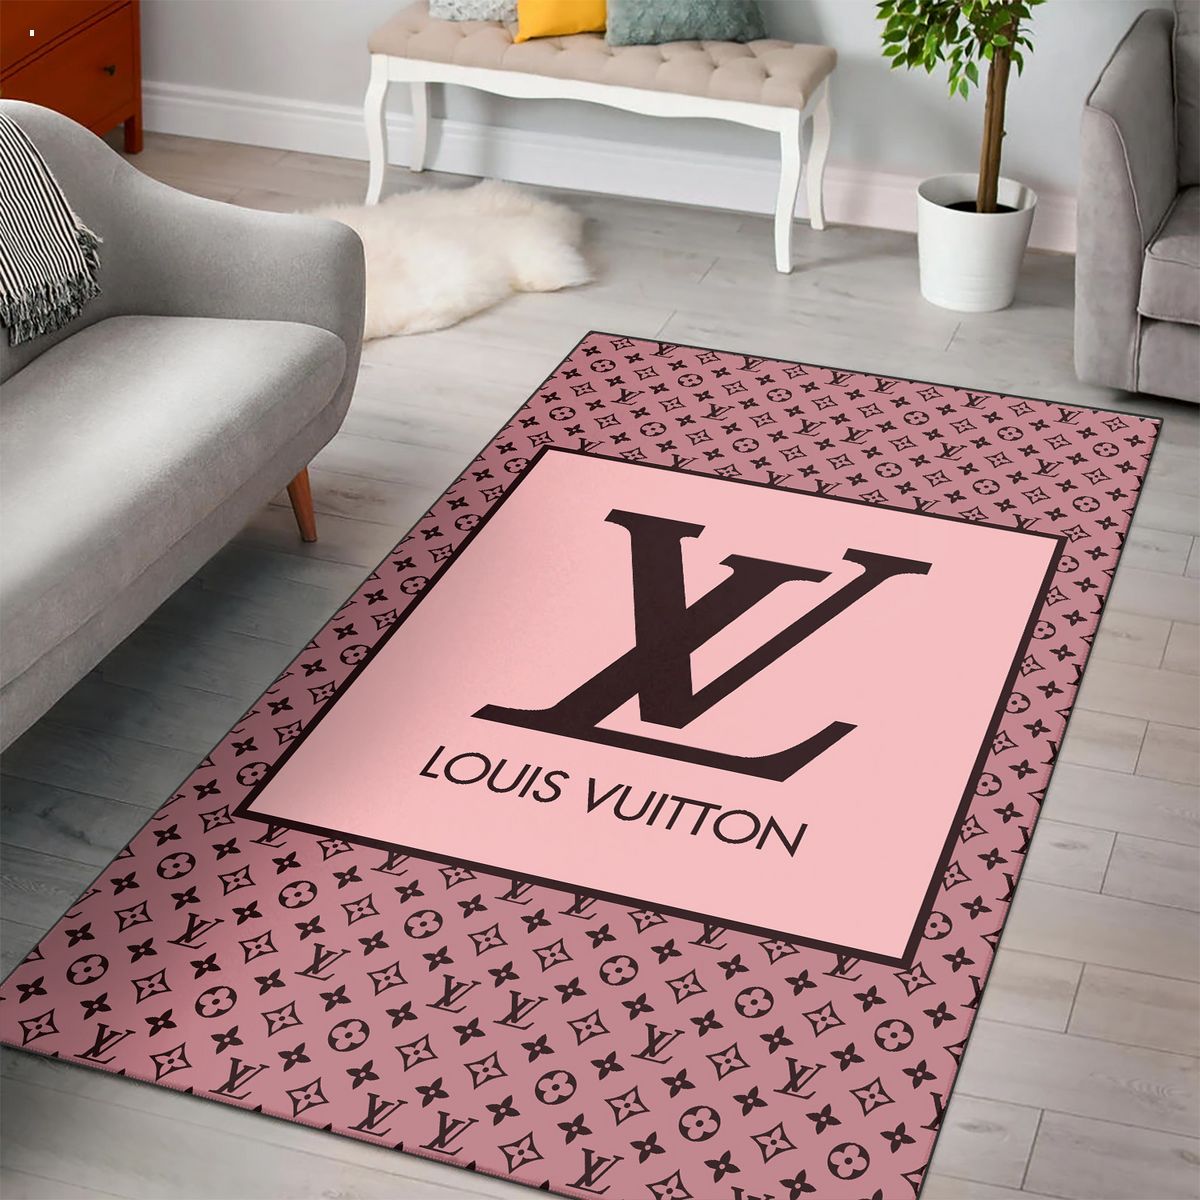 Louis Vuitton Black Pink Luxury Brand Carpet Rug Limited Edition